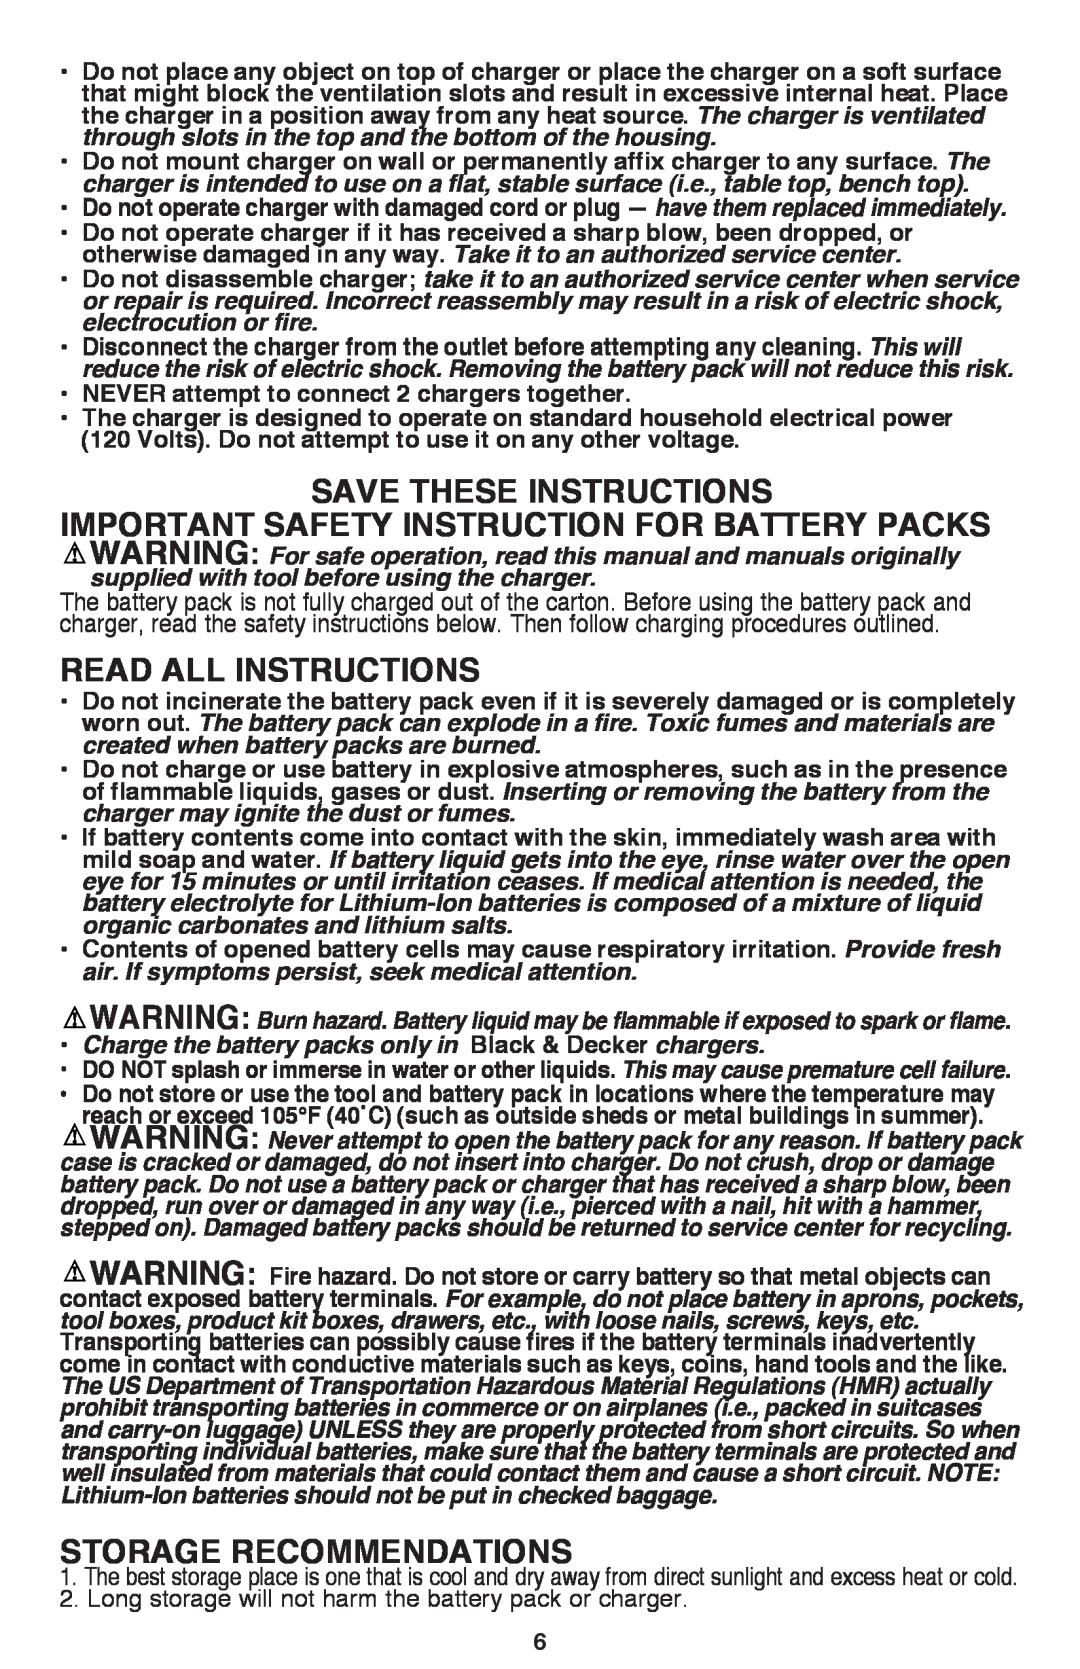 Black & Decker BDCF20, BDCF12 manual Read all Instructions, Storage Recommendations 